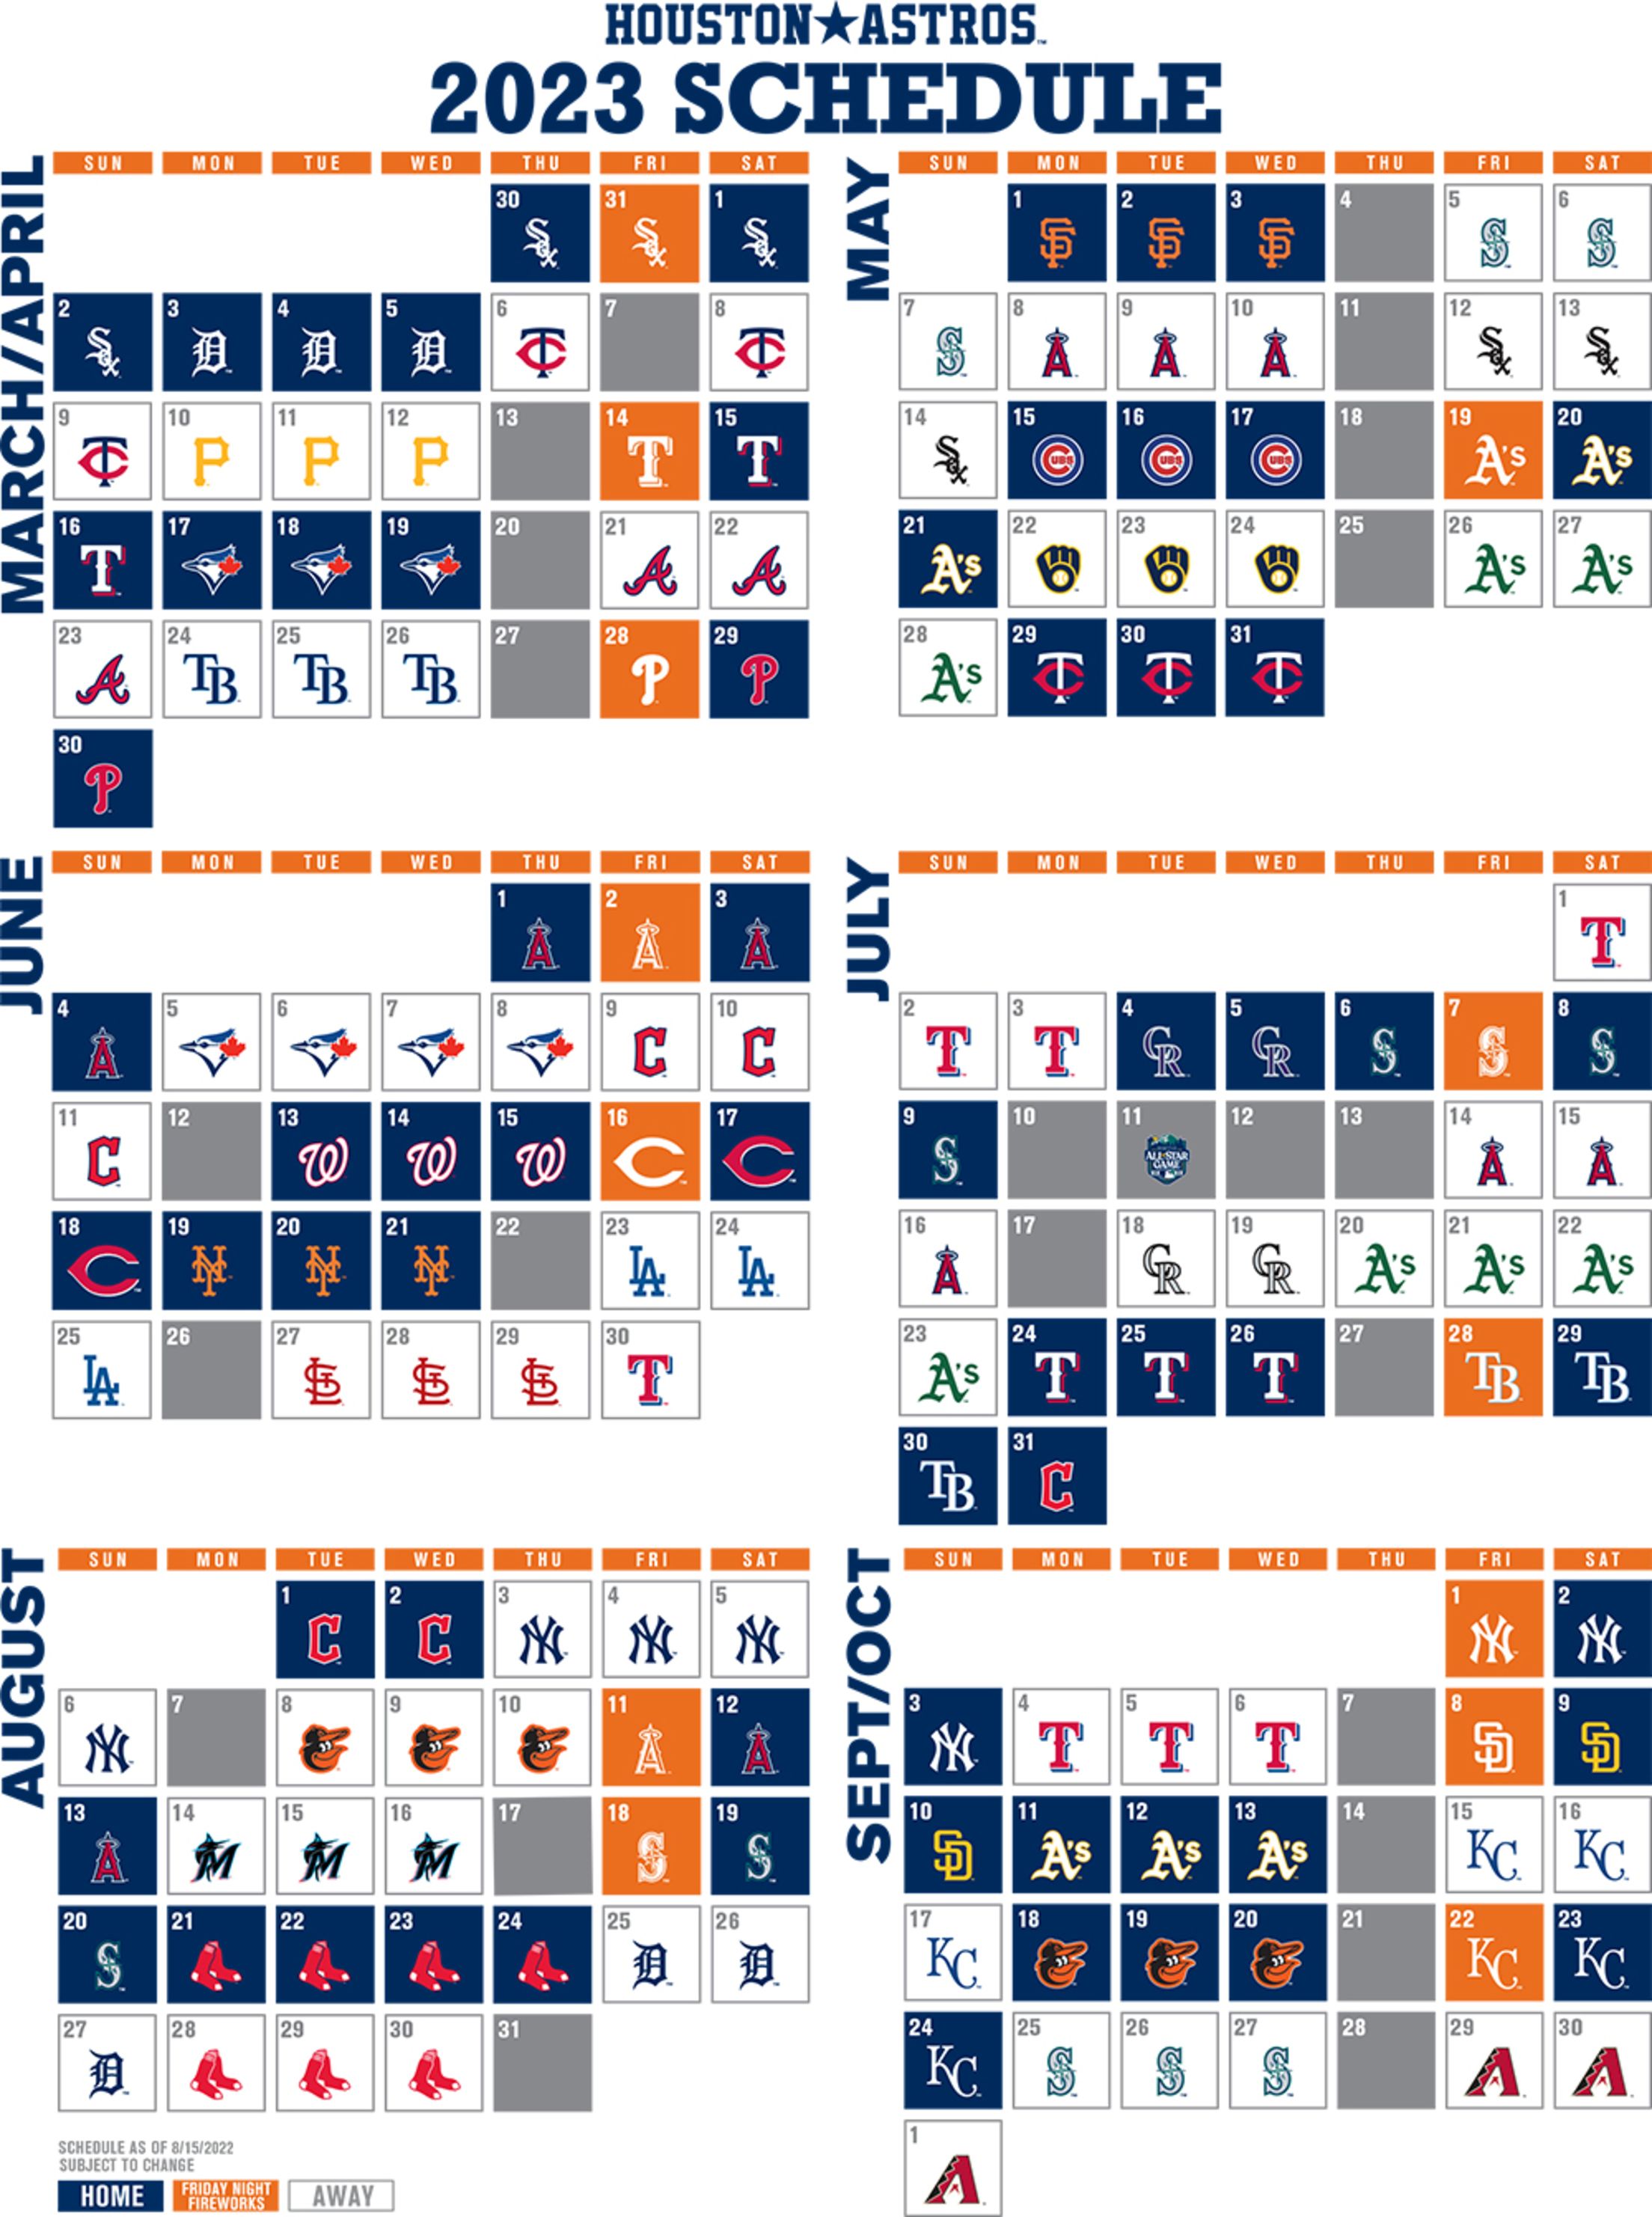 Astros Printable Schedule Click Below To Download 2023 Houston Astros